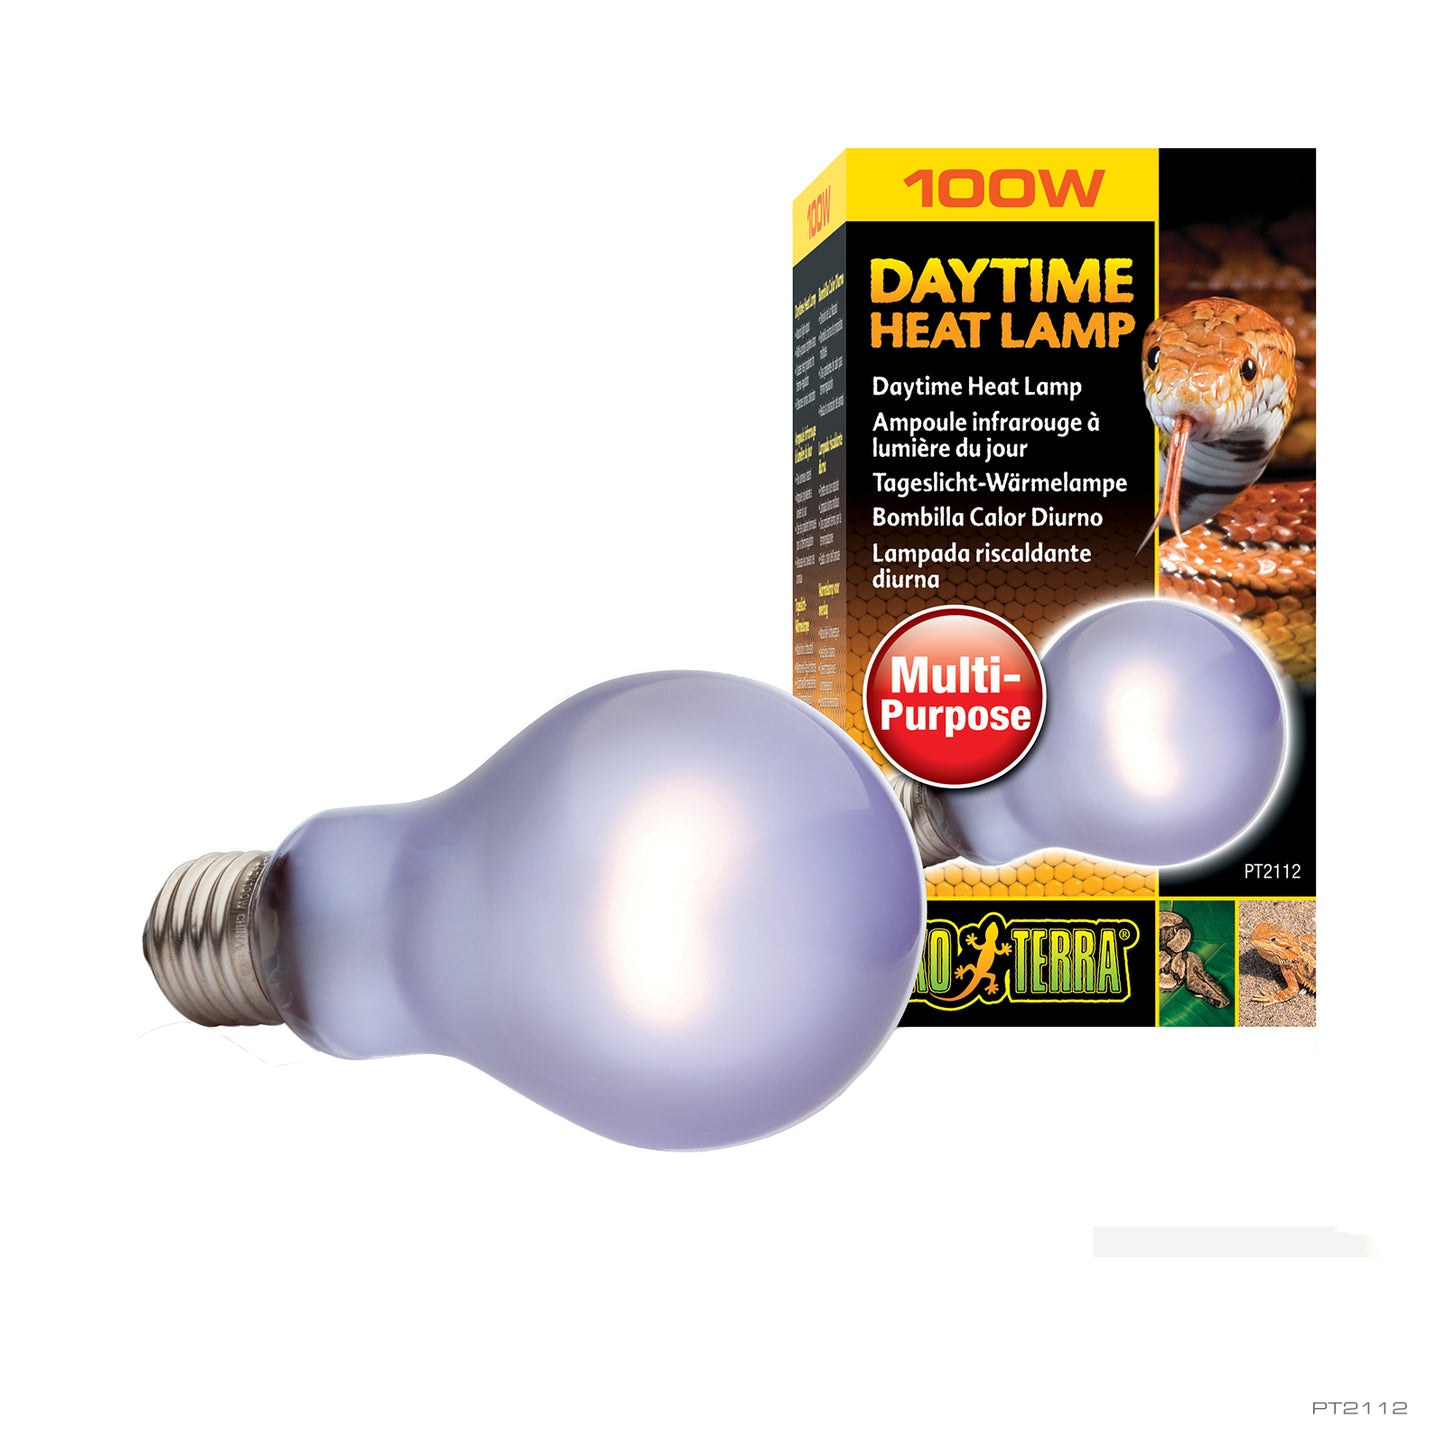 Exo Terra Daytime Heat Lamp - A21 / 100 W